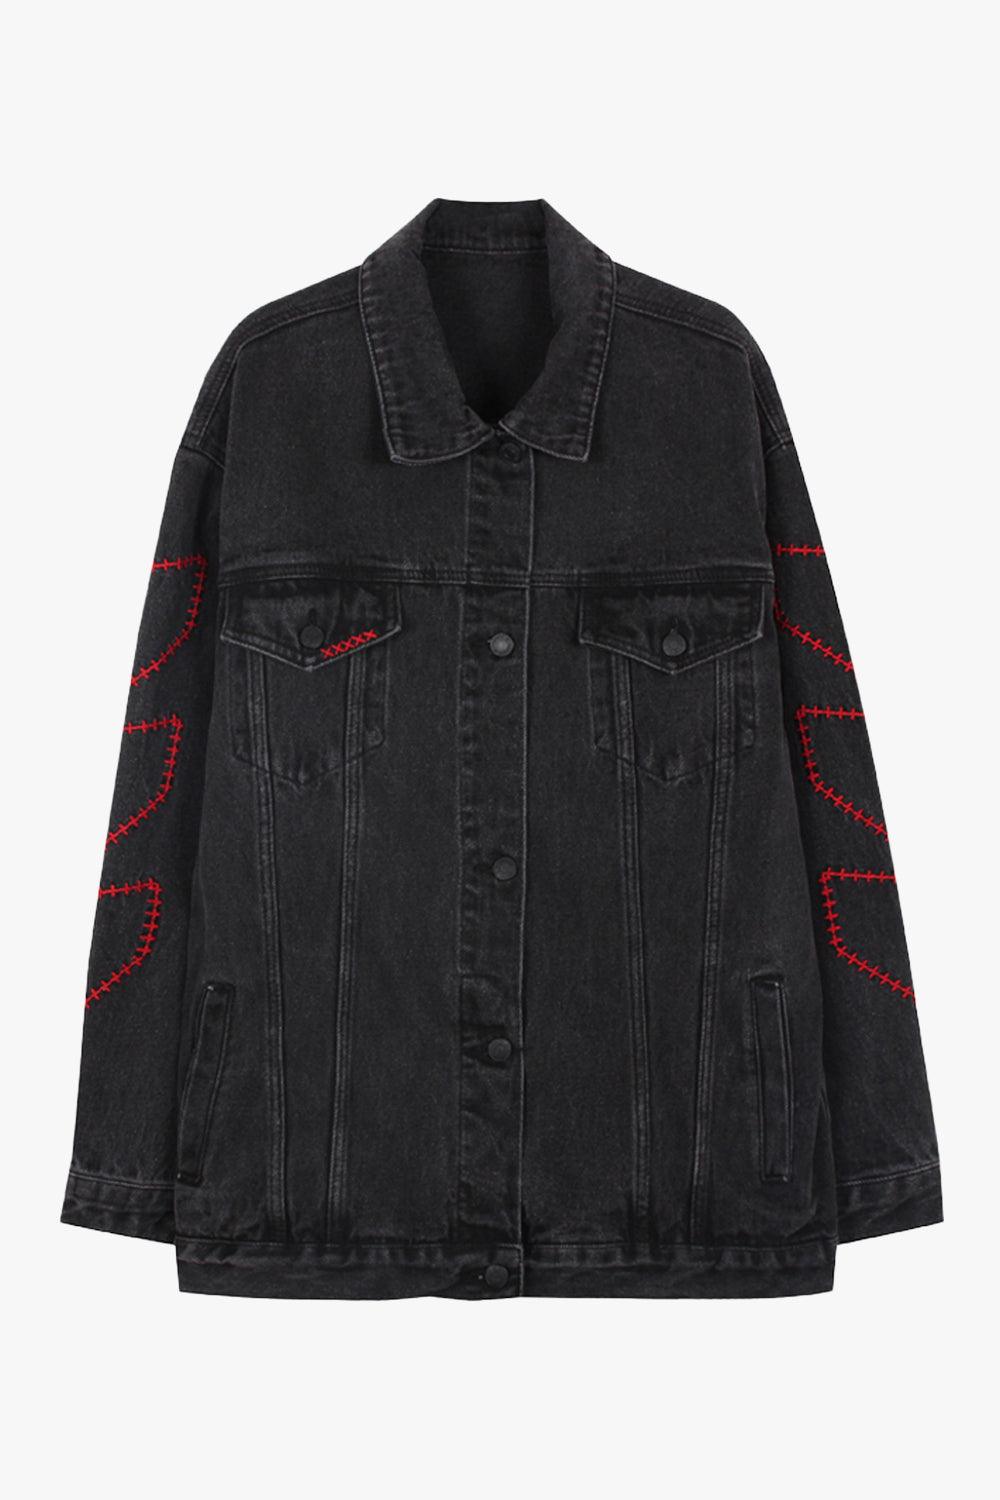 Cross Stitch Black Grunge Denim Jacket • Aesthetic Clothes